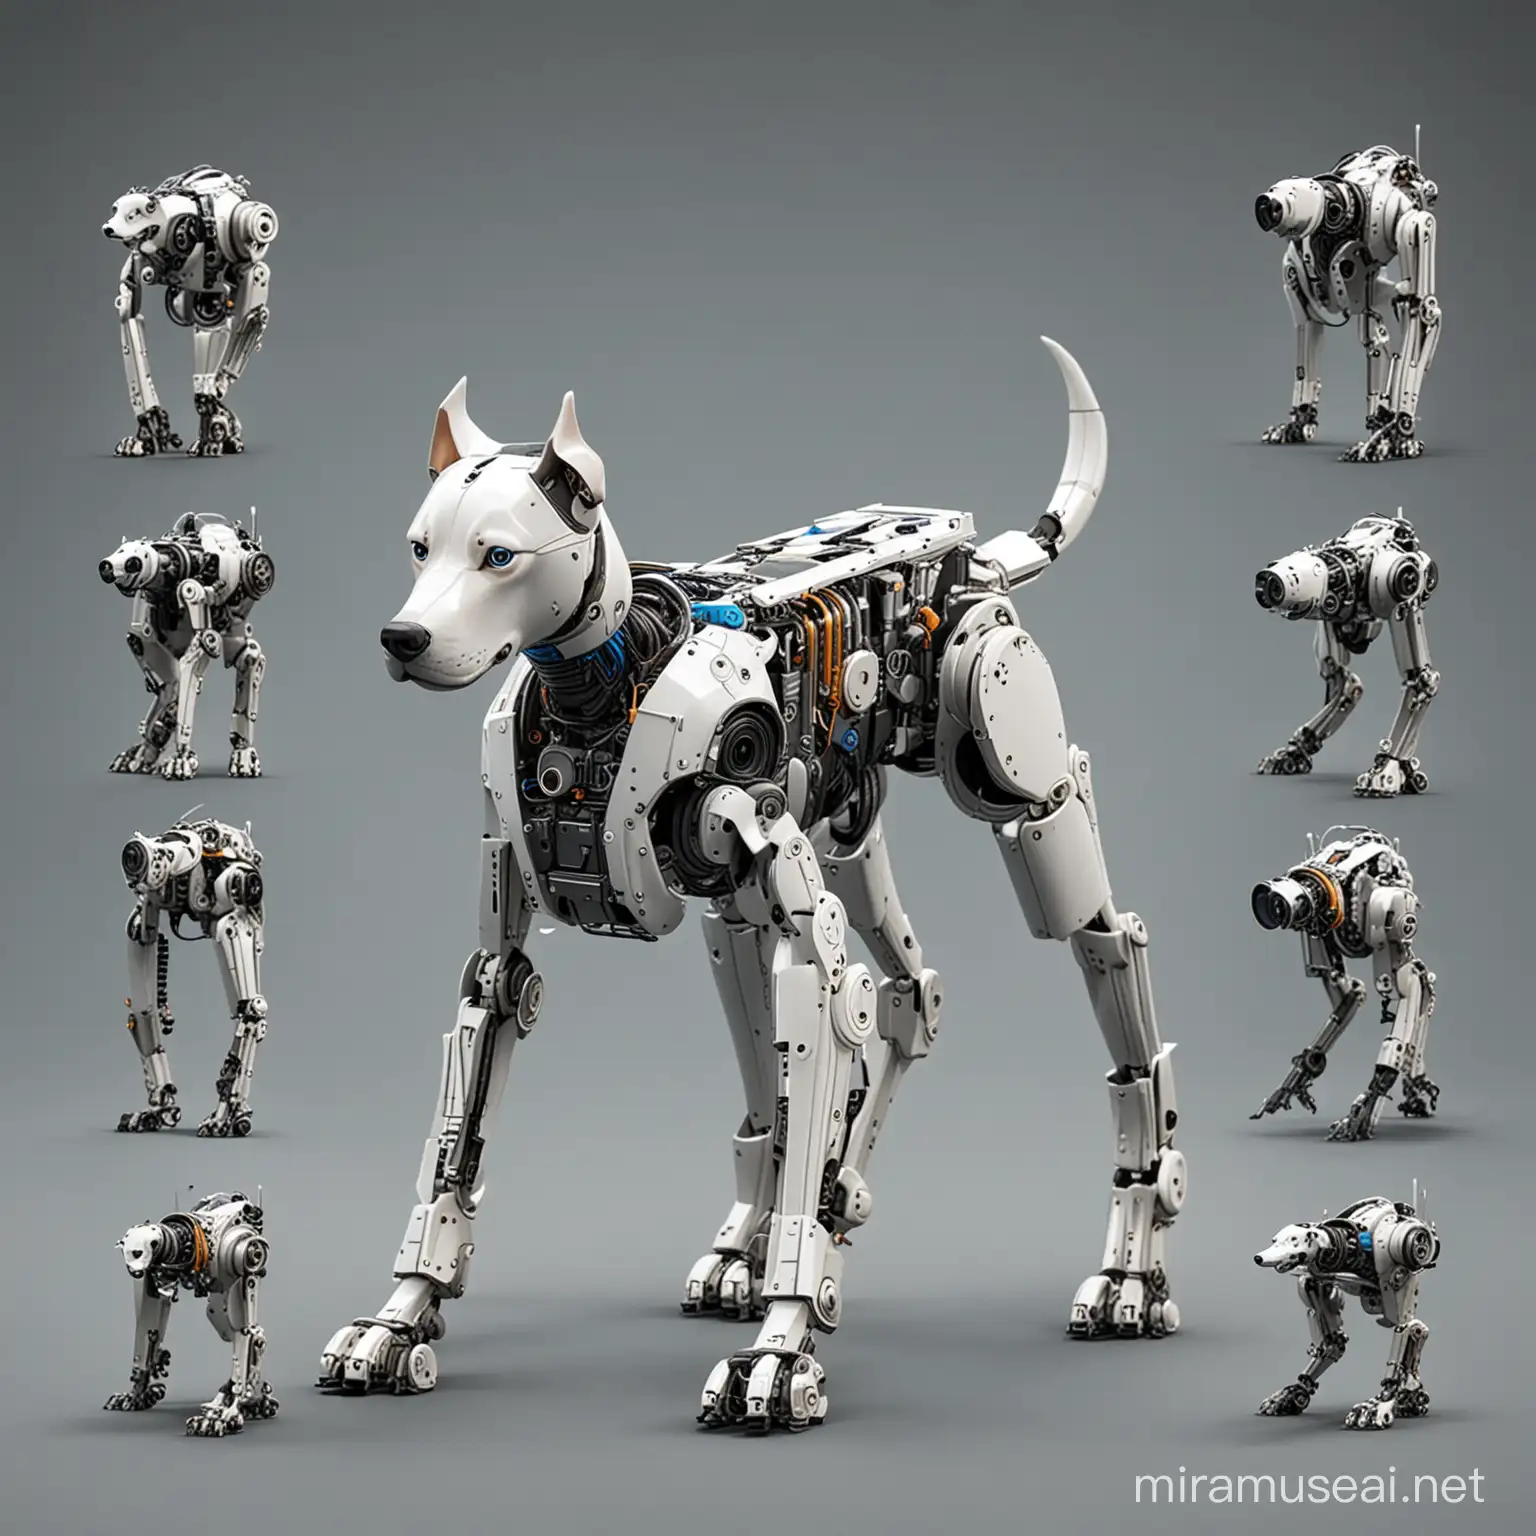 Professional Robot Dog Designer Creating Customized Canine Creations